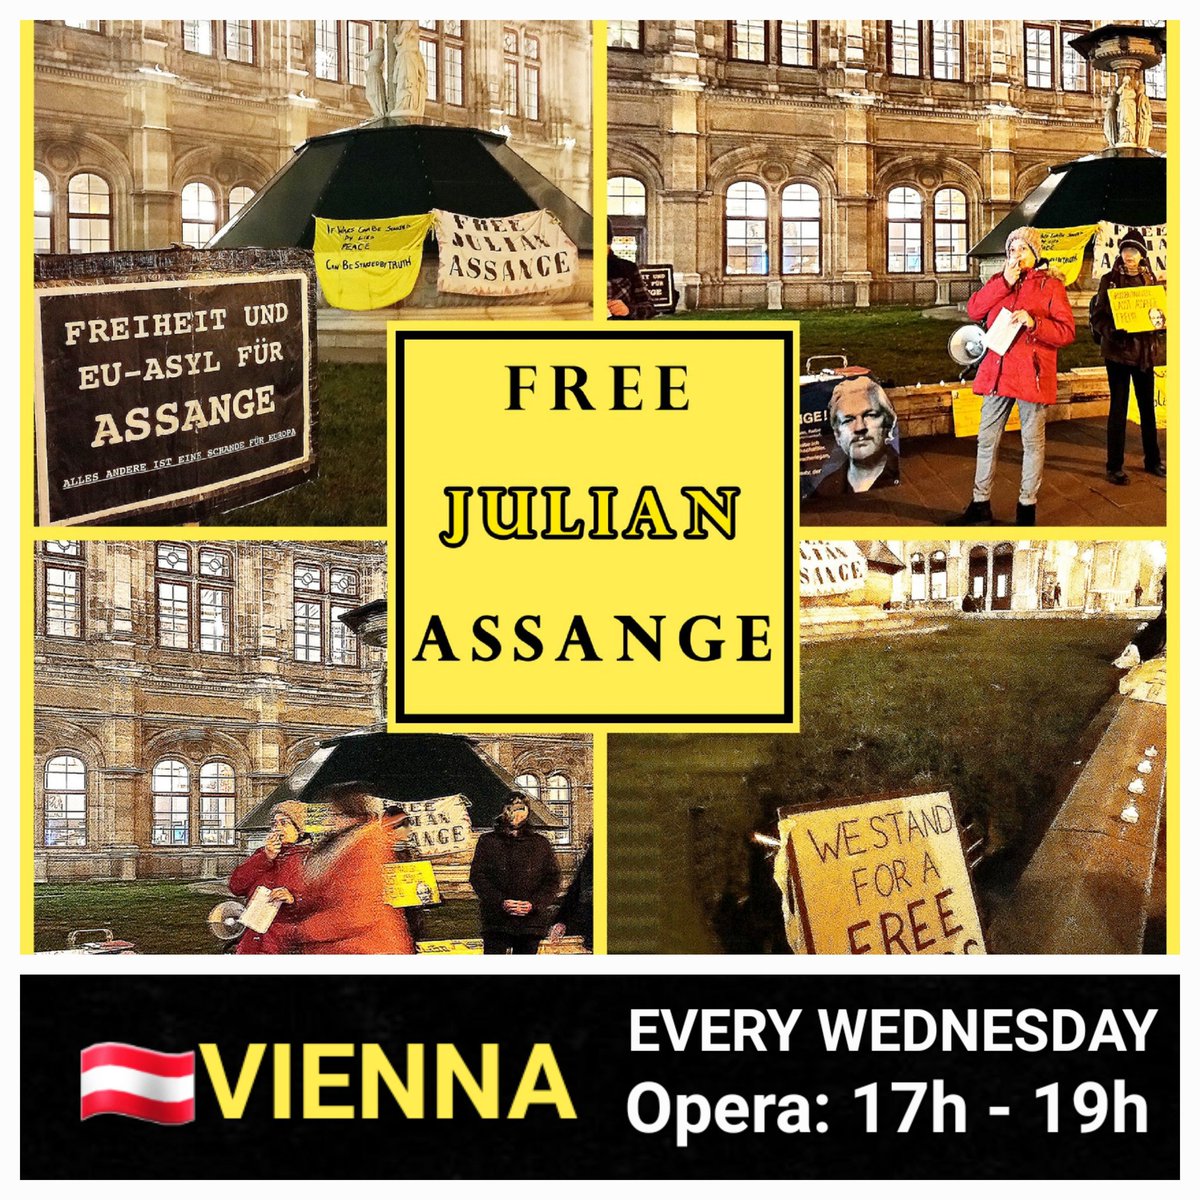 🇦🇹VIENNA

🔥WED 8 MAY 2024
🔥WED 15 MAY 2024
🔥WED 22 MAY 2024
Opera 17h

Weekly on Wednesdays #ViennaCandles4Assange
#AustriaCandles4Assange

#FreeAssangeNOW 

via @yviy1